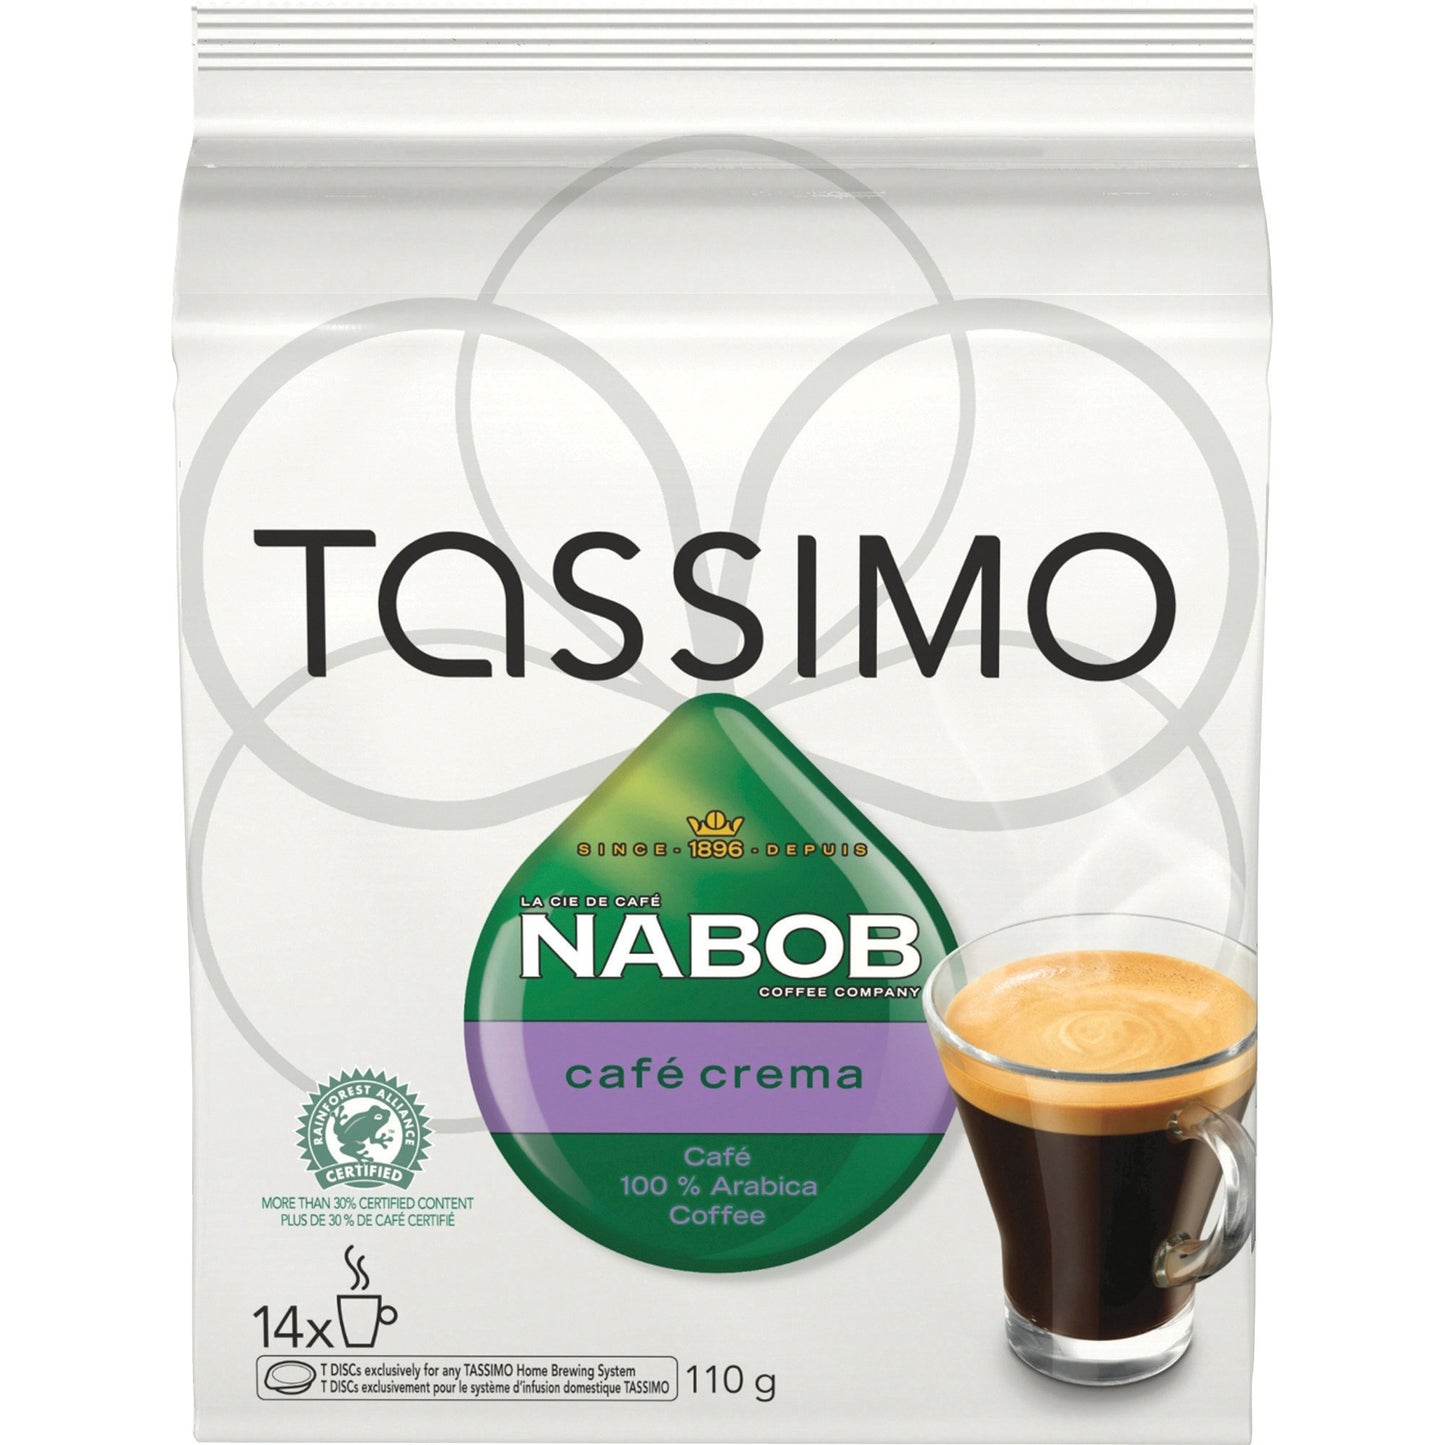 Elco Pod Tassimo Singles Nabob Cafe Crema Coffee